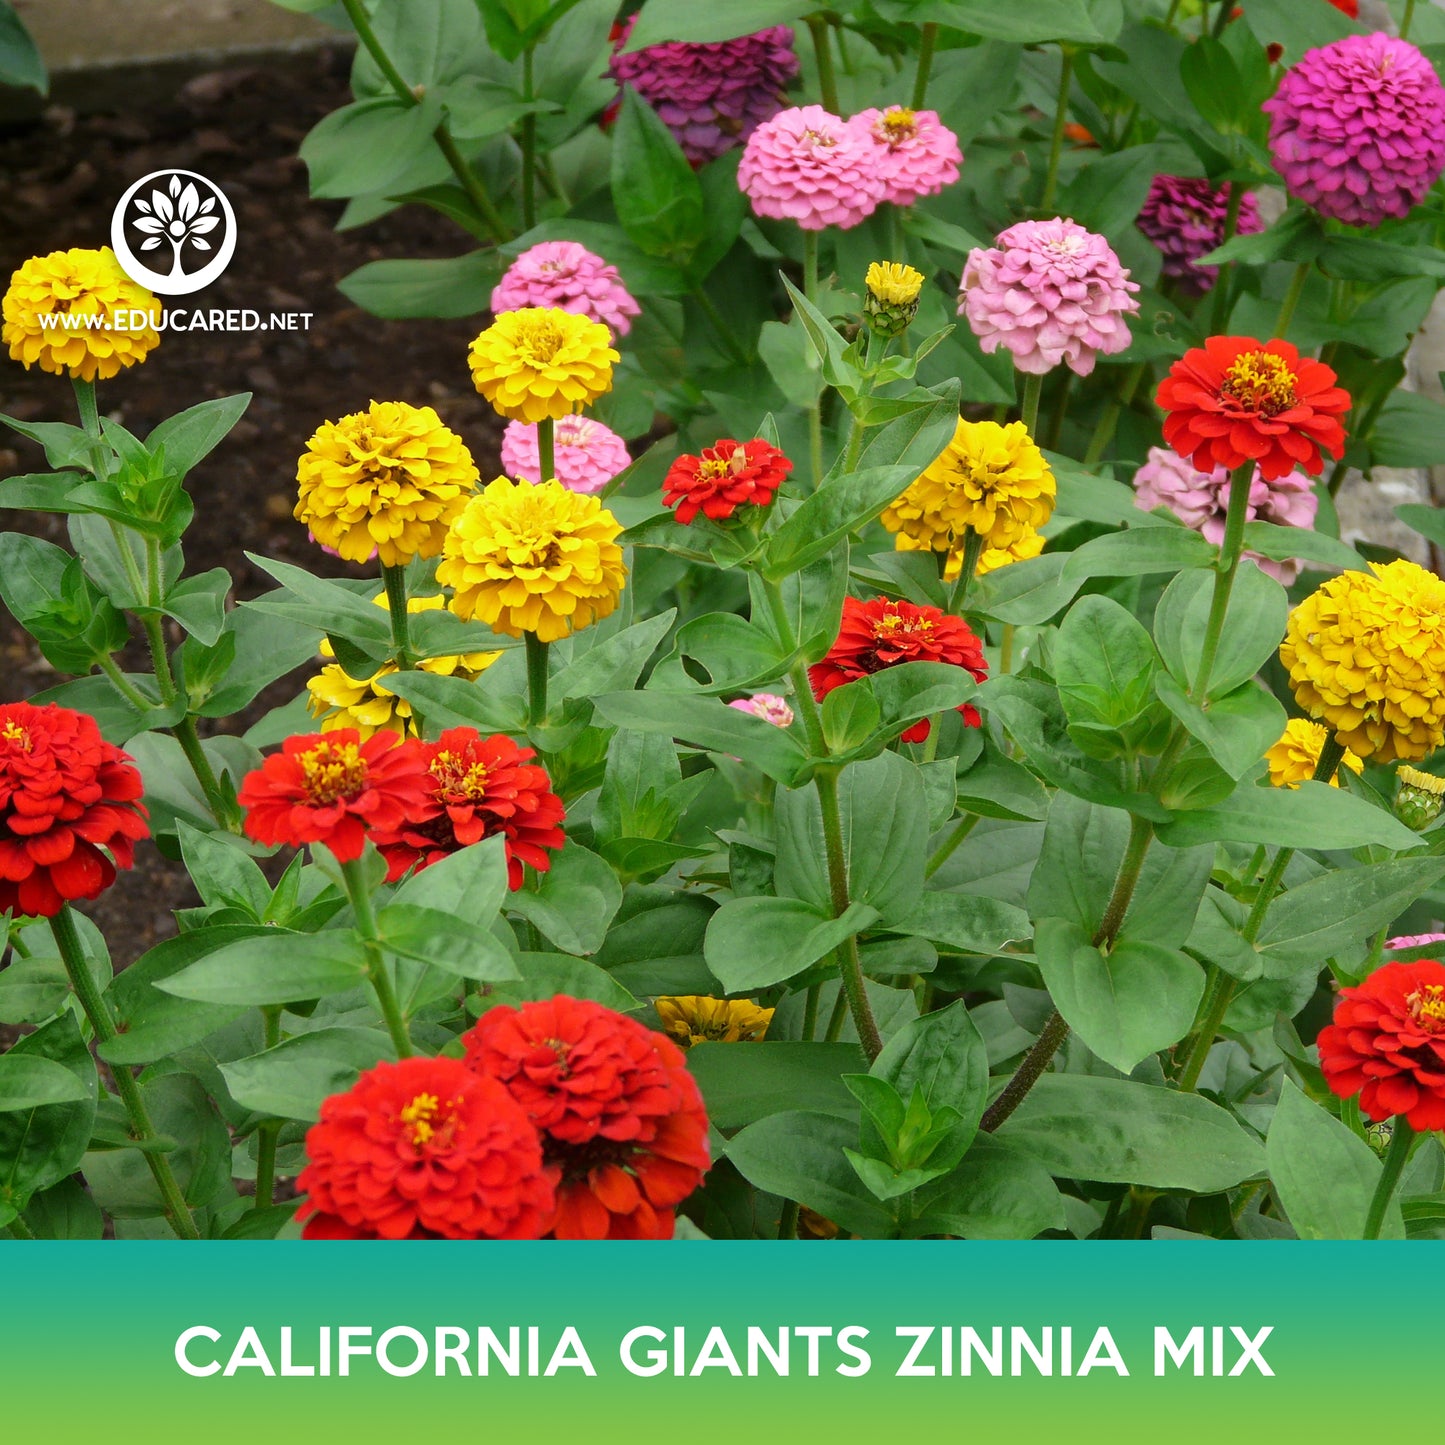 California Giants Zinnia Mix Seed, Zinnia elegans